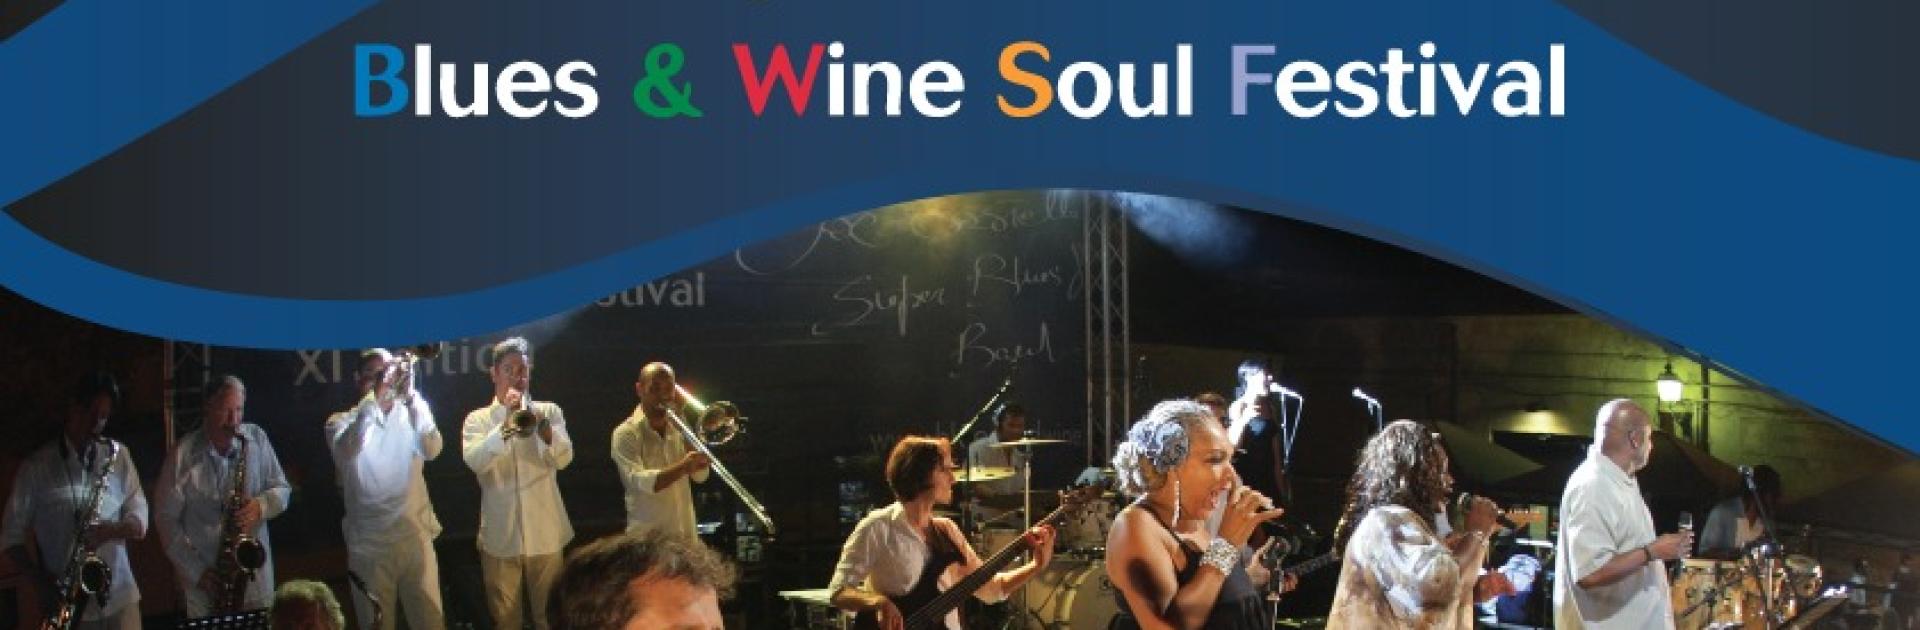 sanpietrotaormina it blues-wine-soul-festival 001